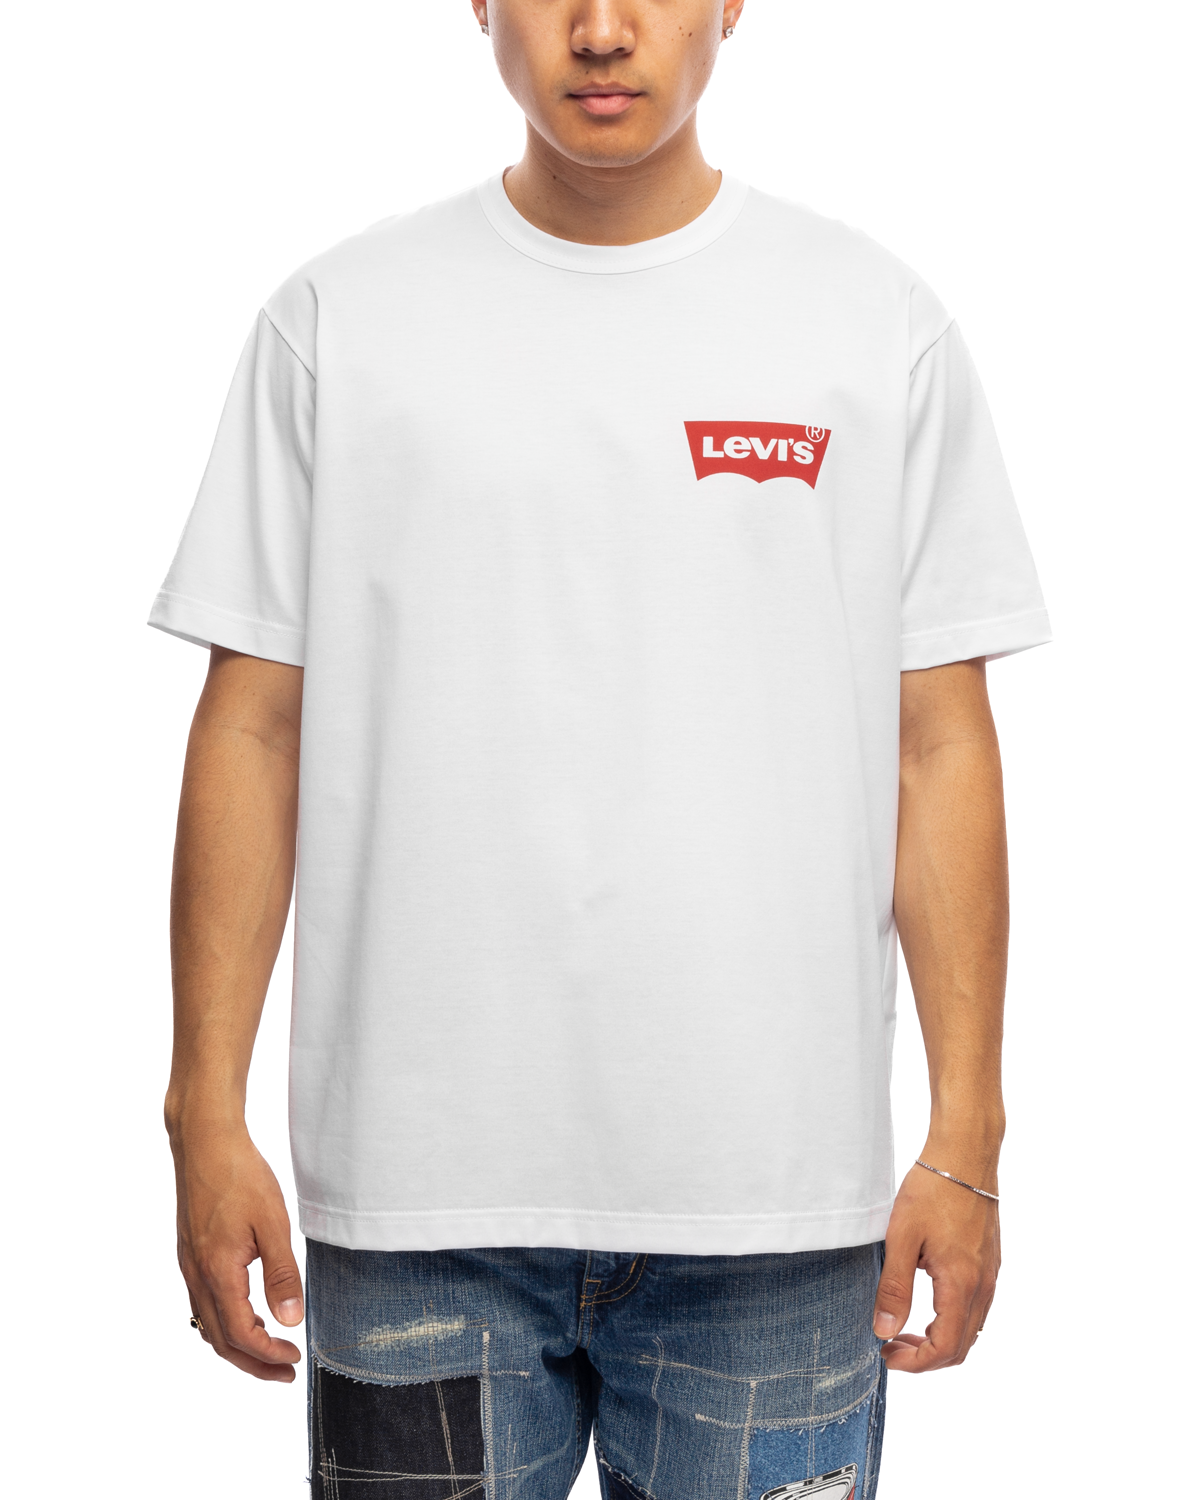 Levis x T Shirt White